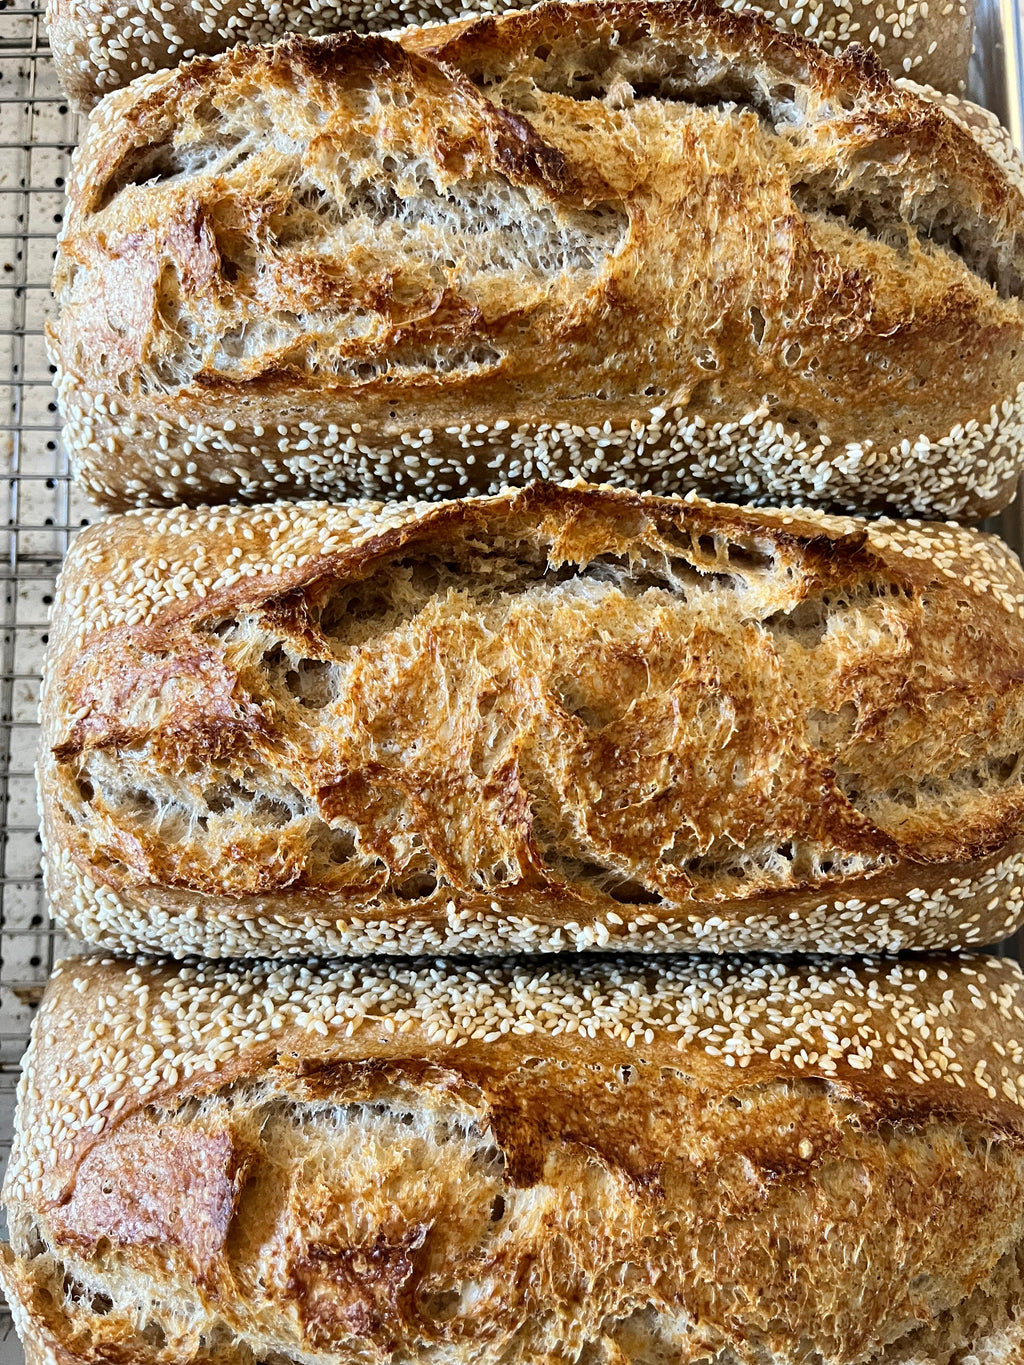 FRI JULY 26th sourdough sandwich bread - 10a-8pm Porch Pick up or purplebrown 10-5p